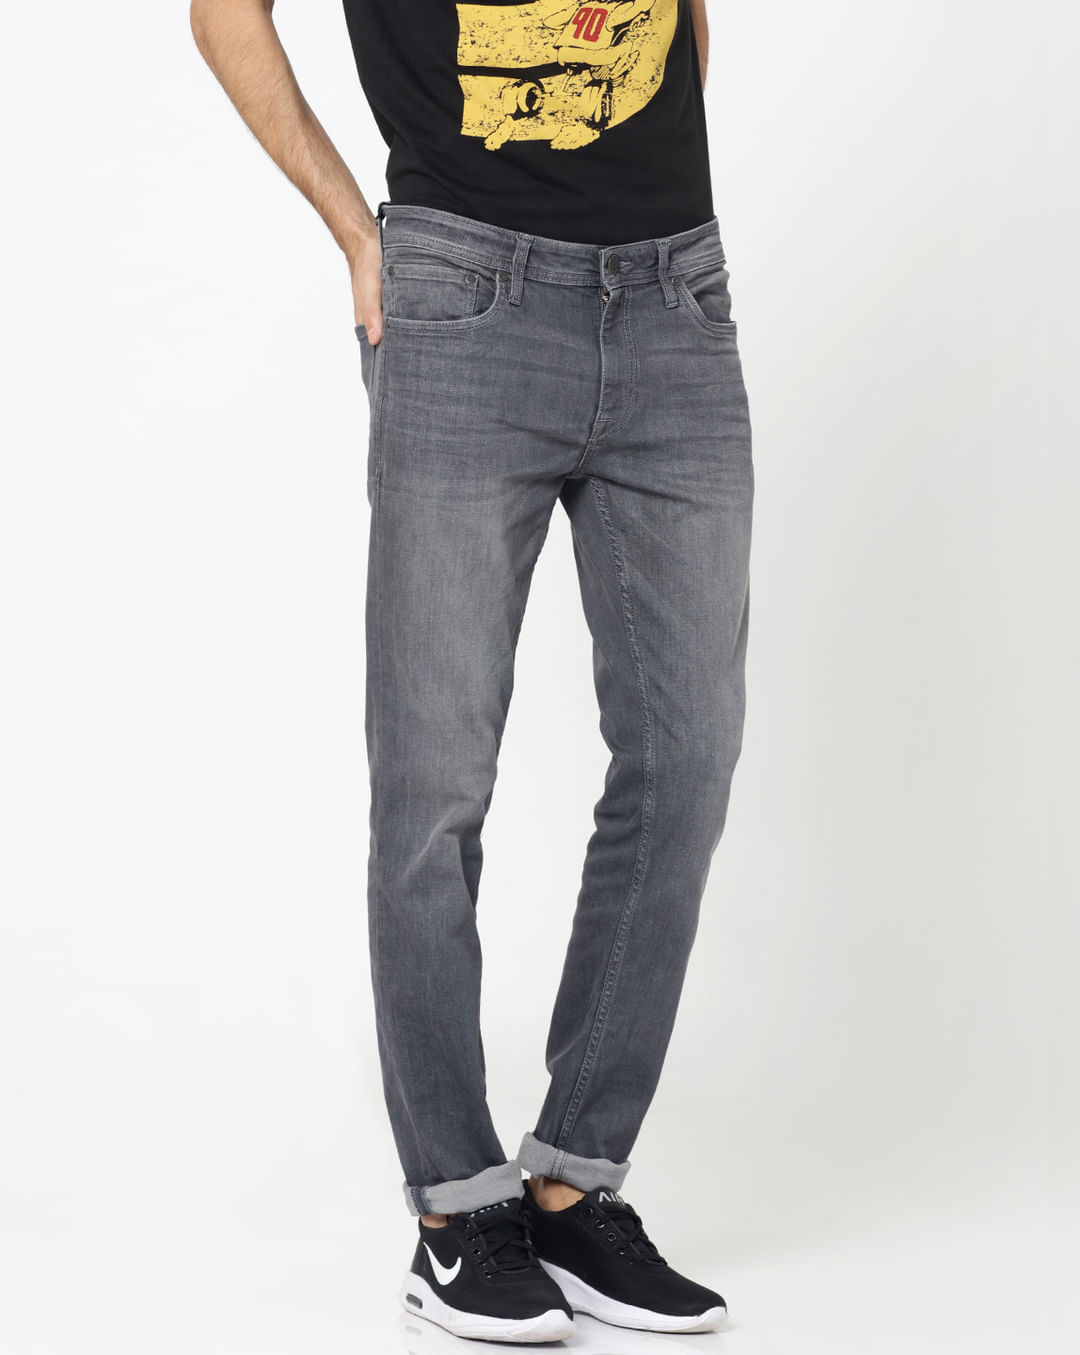 Skinny Jeans Buy Men Grey Ben Skinny Fit Jeans Online